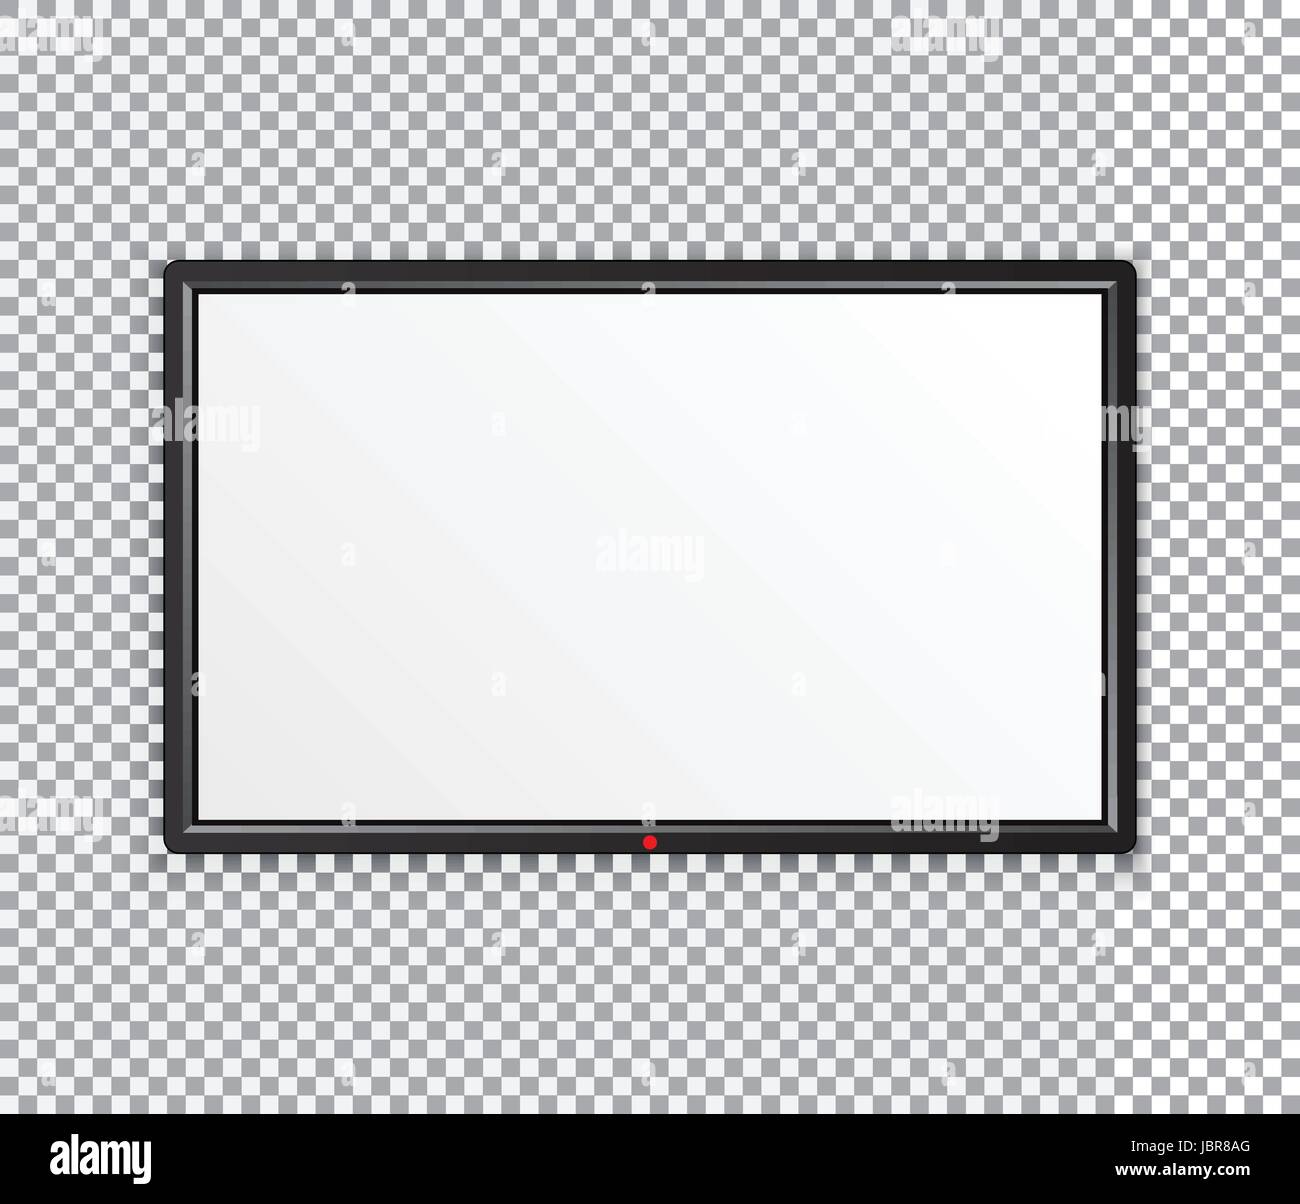 TV plasma, modern blank screen lcd, led, on isolate background, stylish vector illustration EPS10 Stock Vector